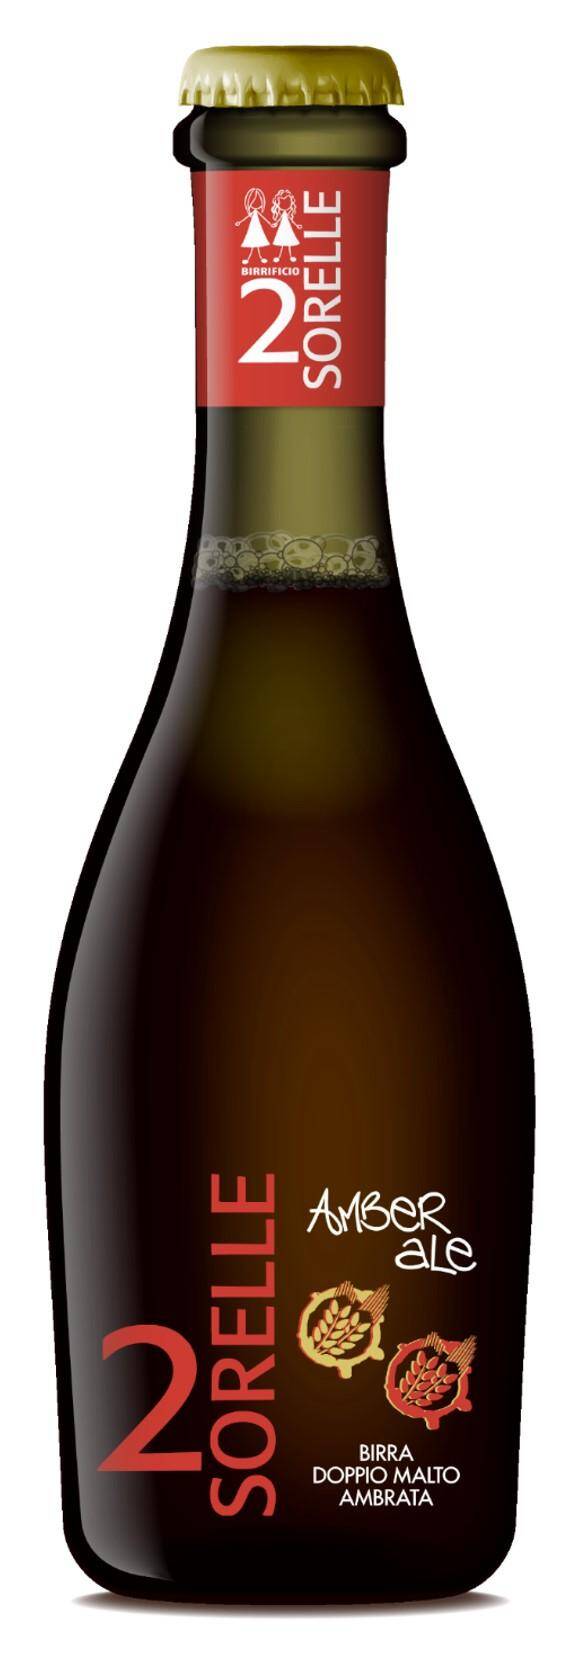 Piwo włoskie 2 Sorelle AMBER ALE 7,5% 330ml/12